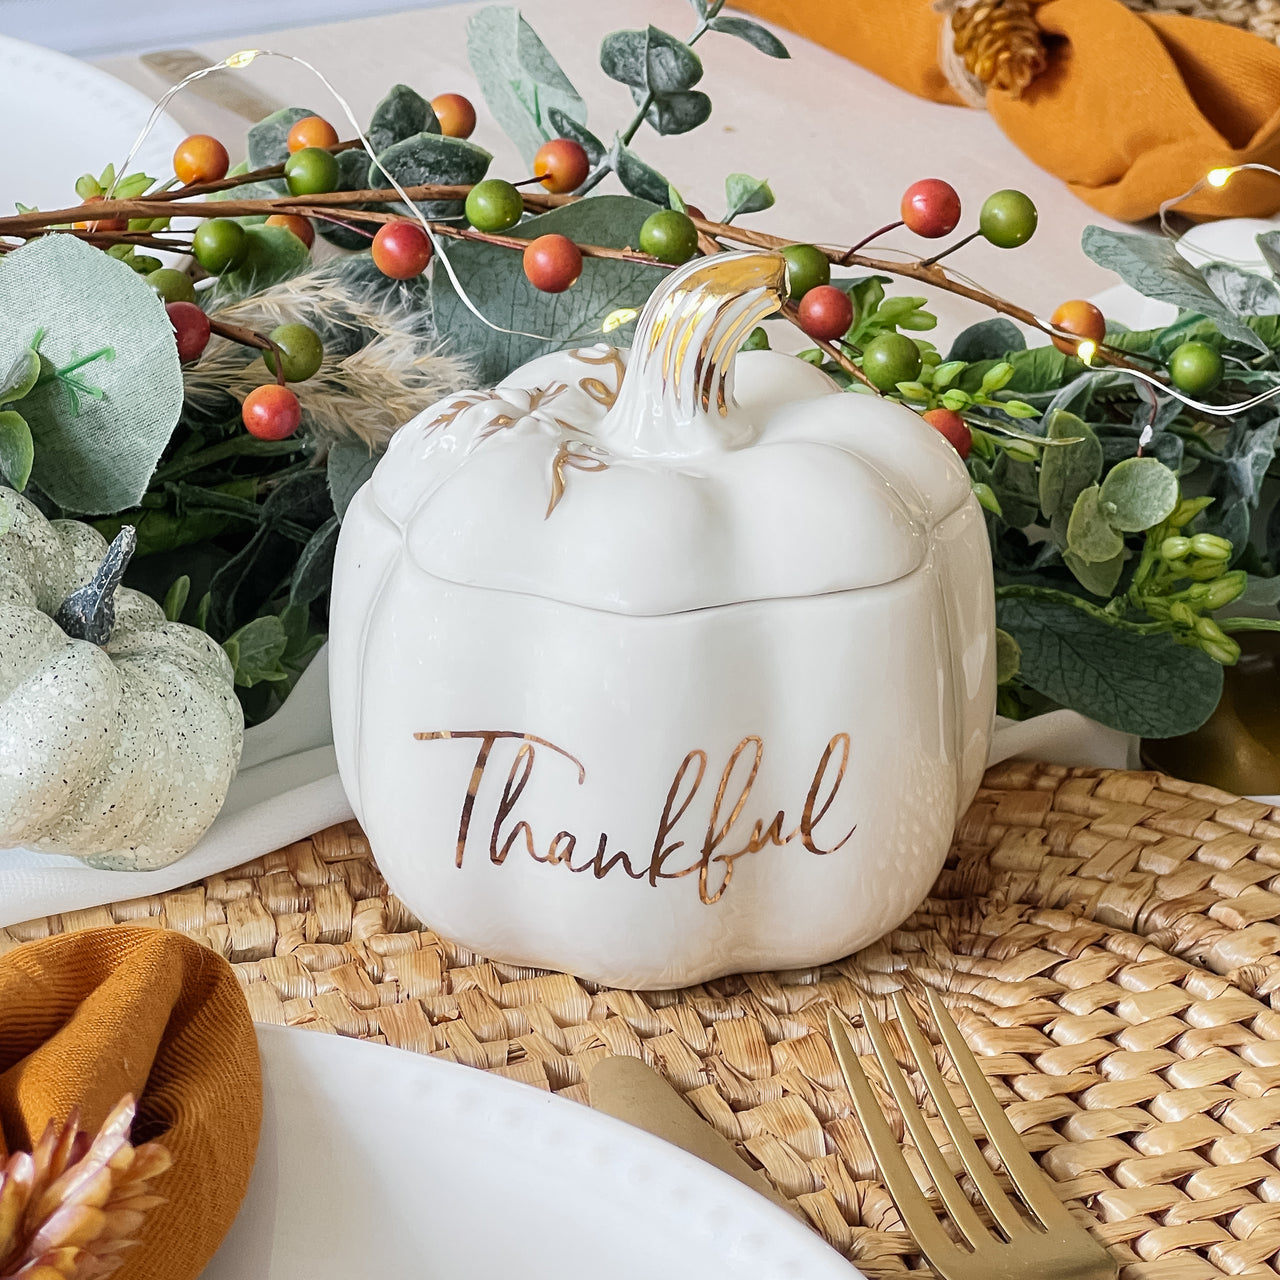 Thankful White Pumpkin Decorative Bowl - Main Image | My Wedding Favors